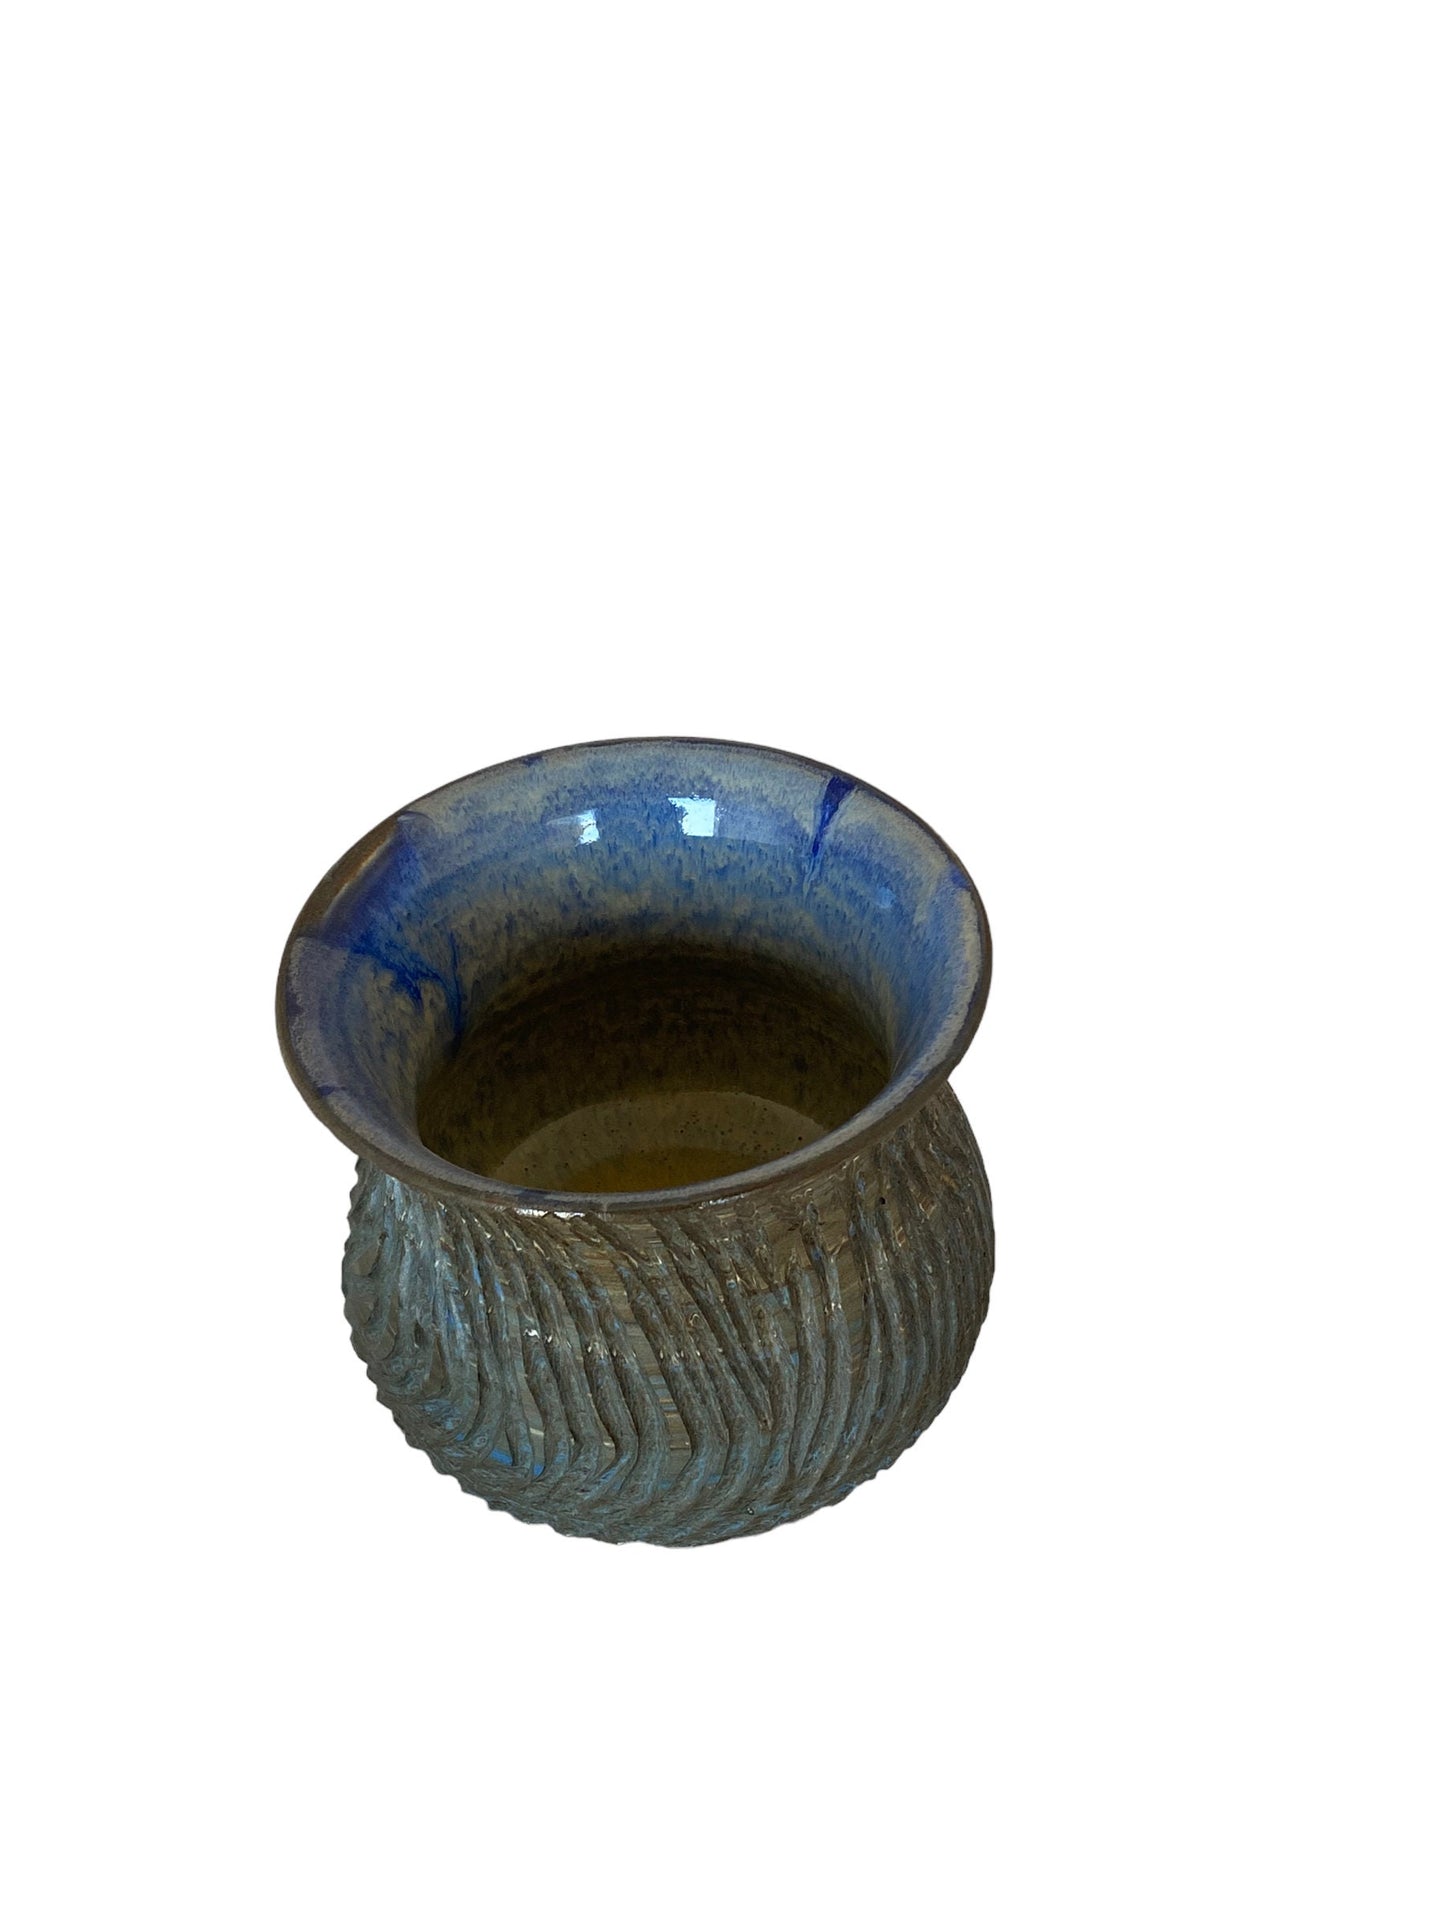 Agateware Pottery Vase - Pottery Flower Vase - Contemporary Ceramic Pottery Vase - Modern Vases